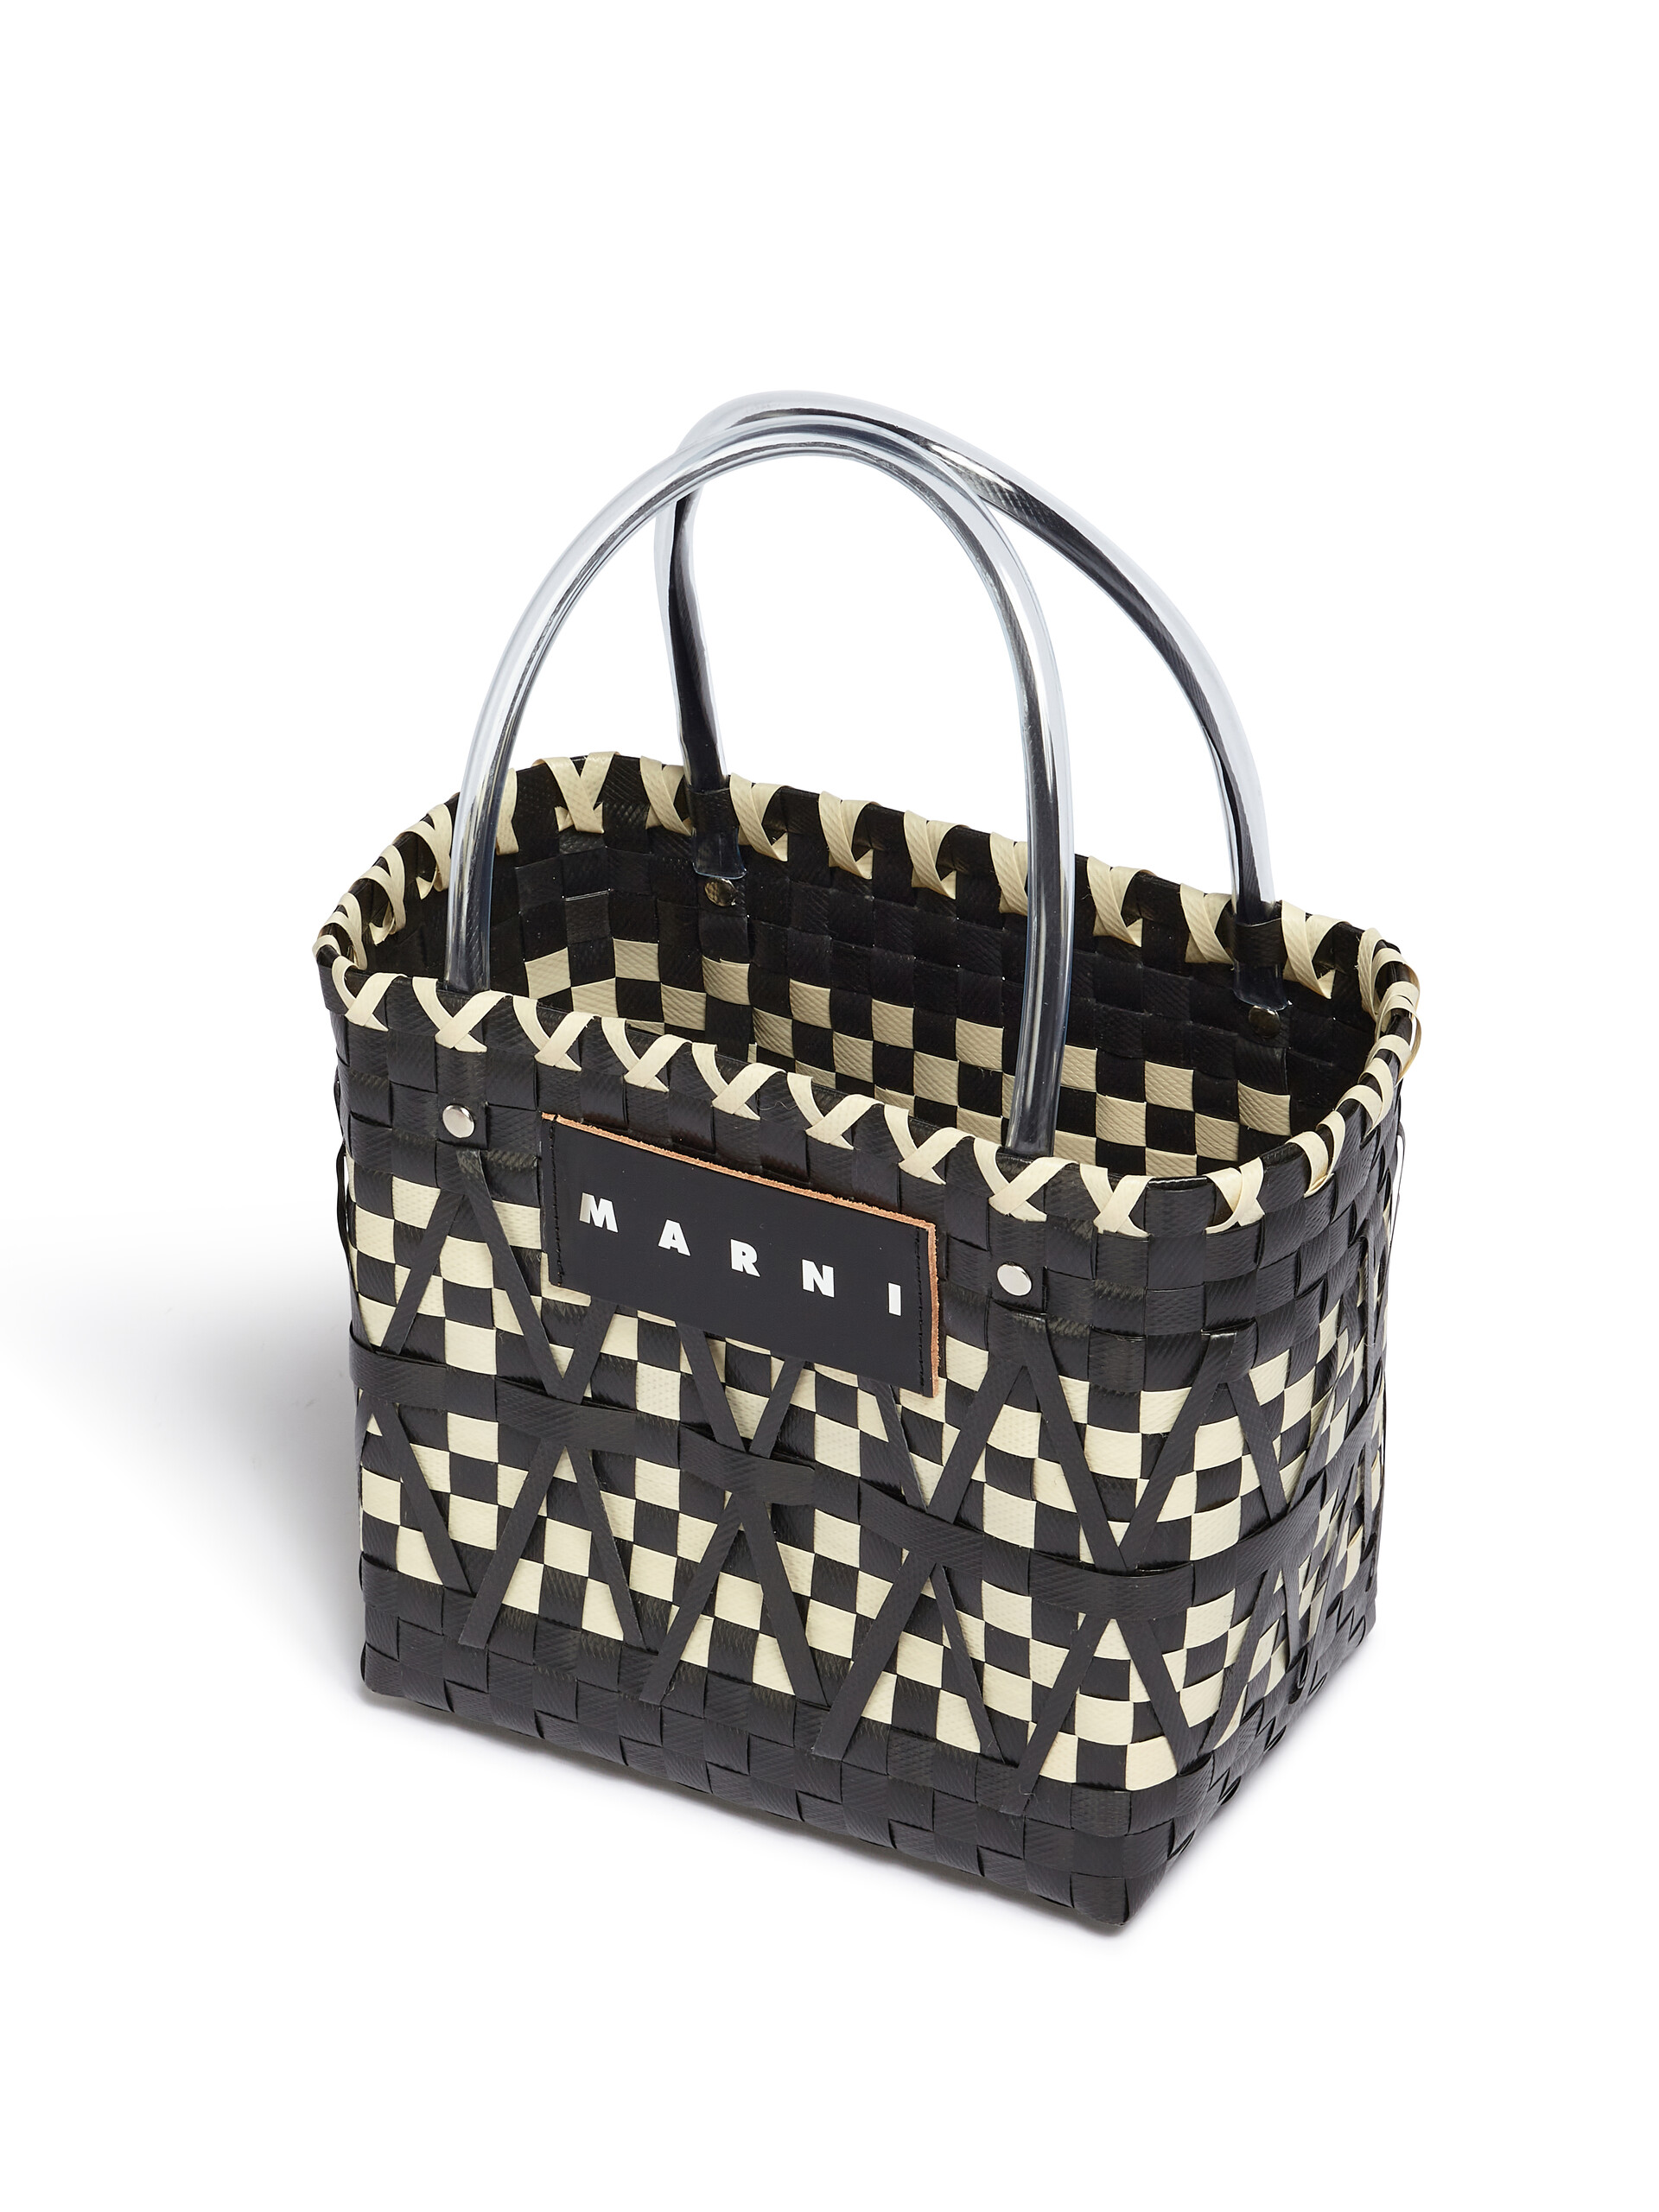 MARNI MARKET black and white shopping bag - Bags - Image 4